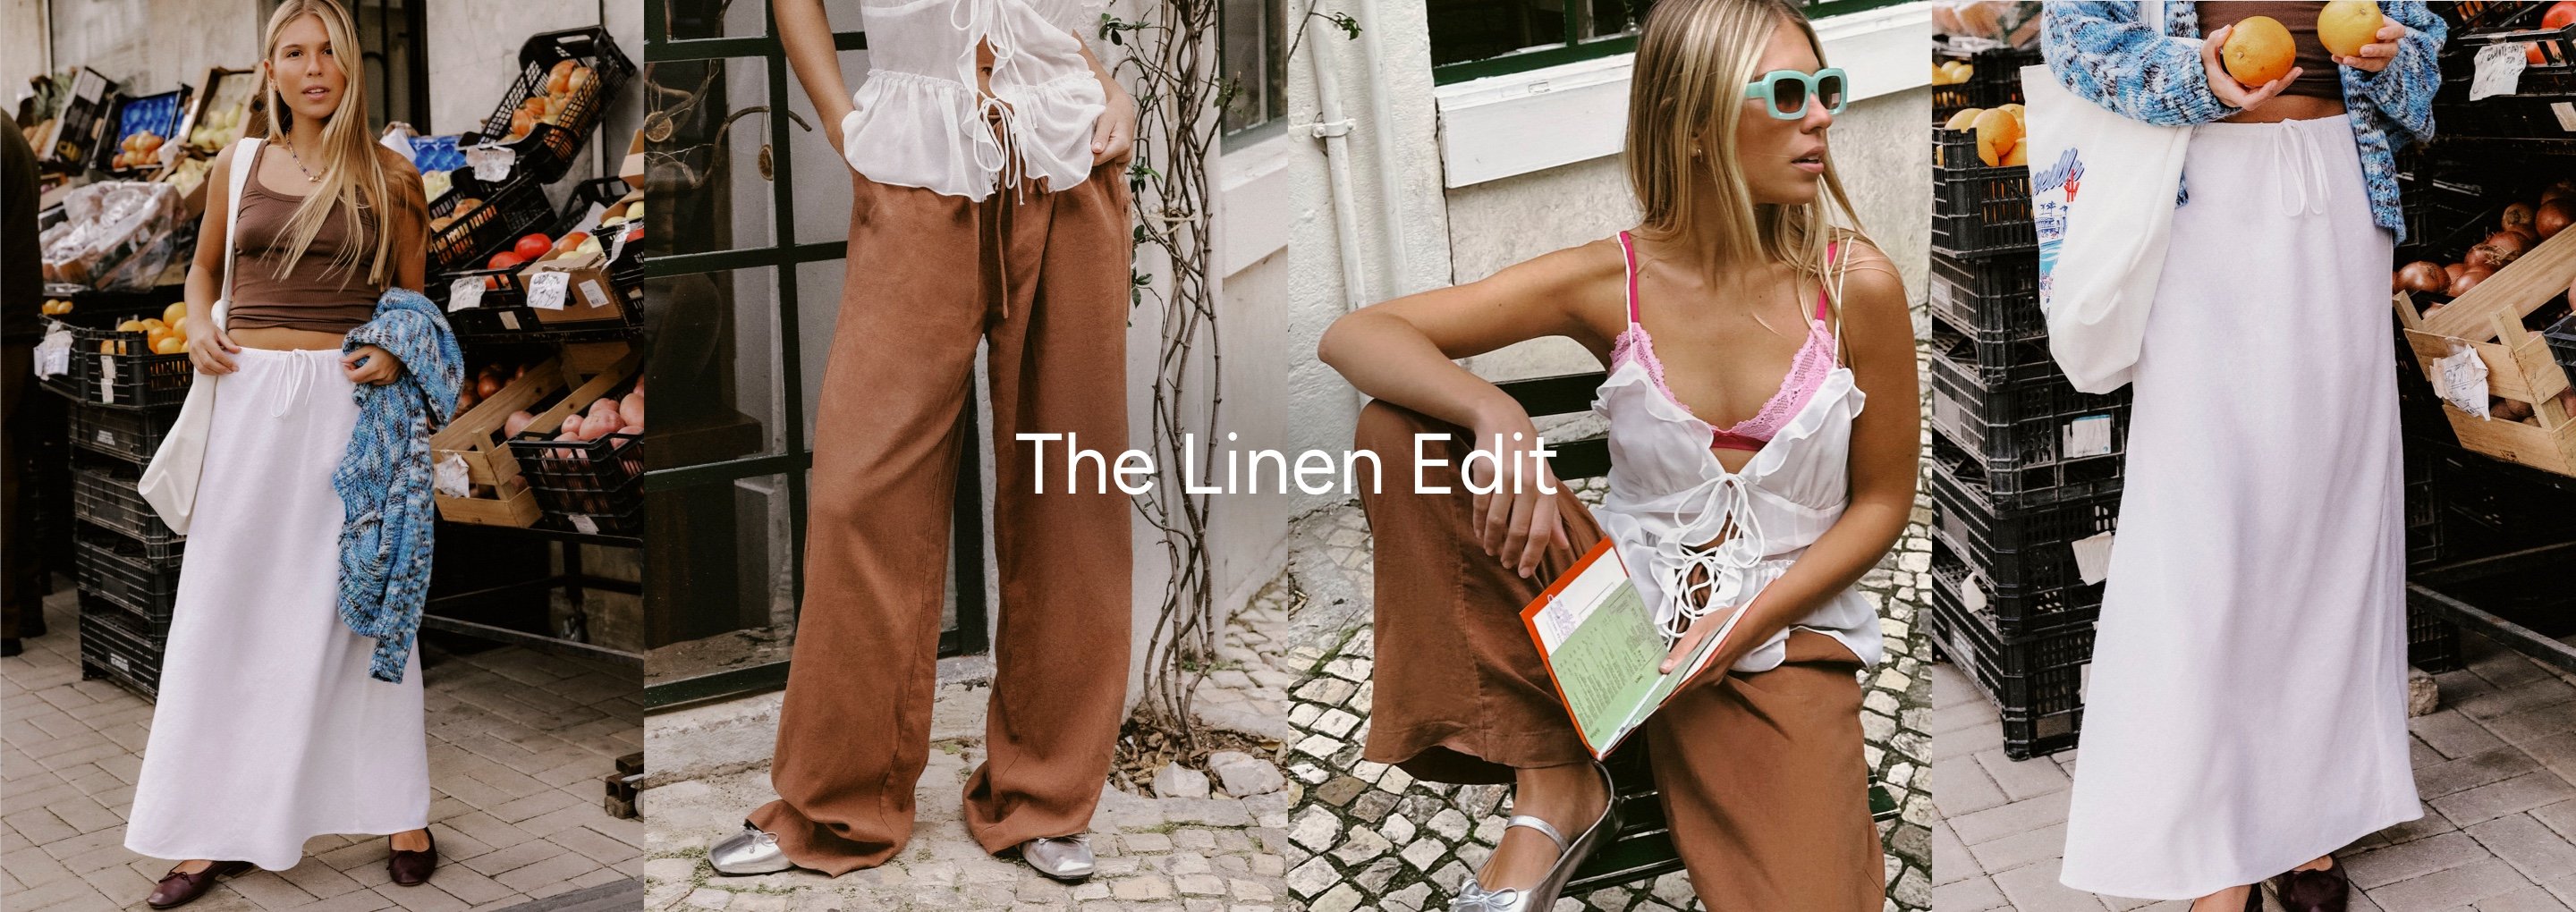 The Linen edit.